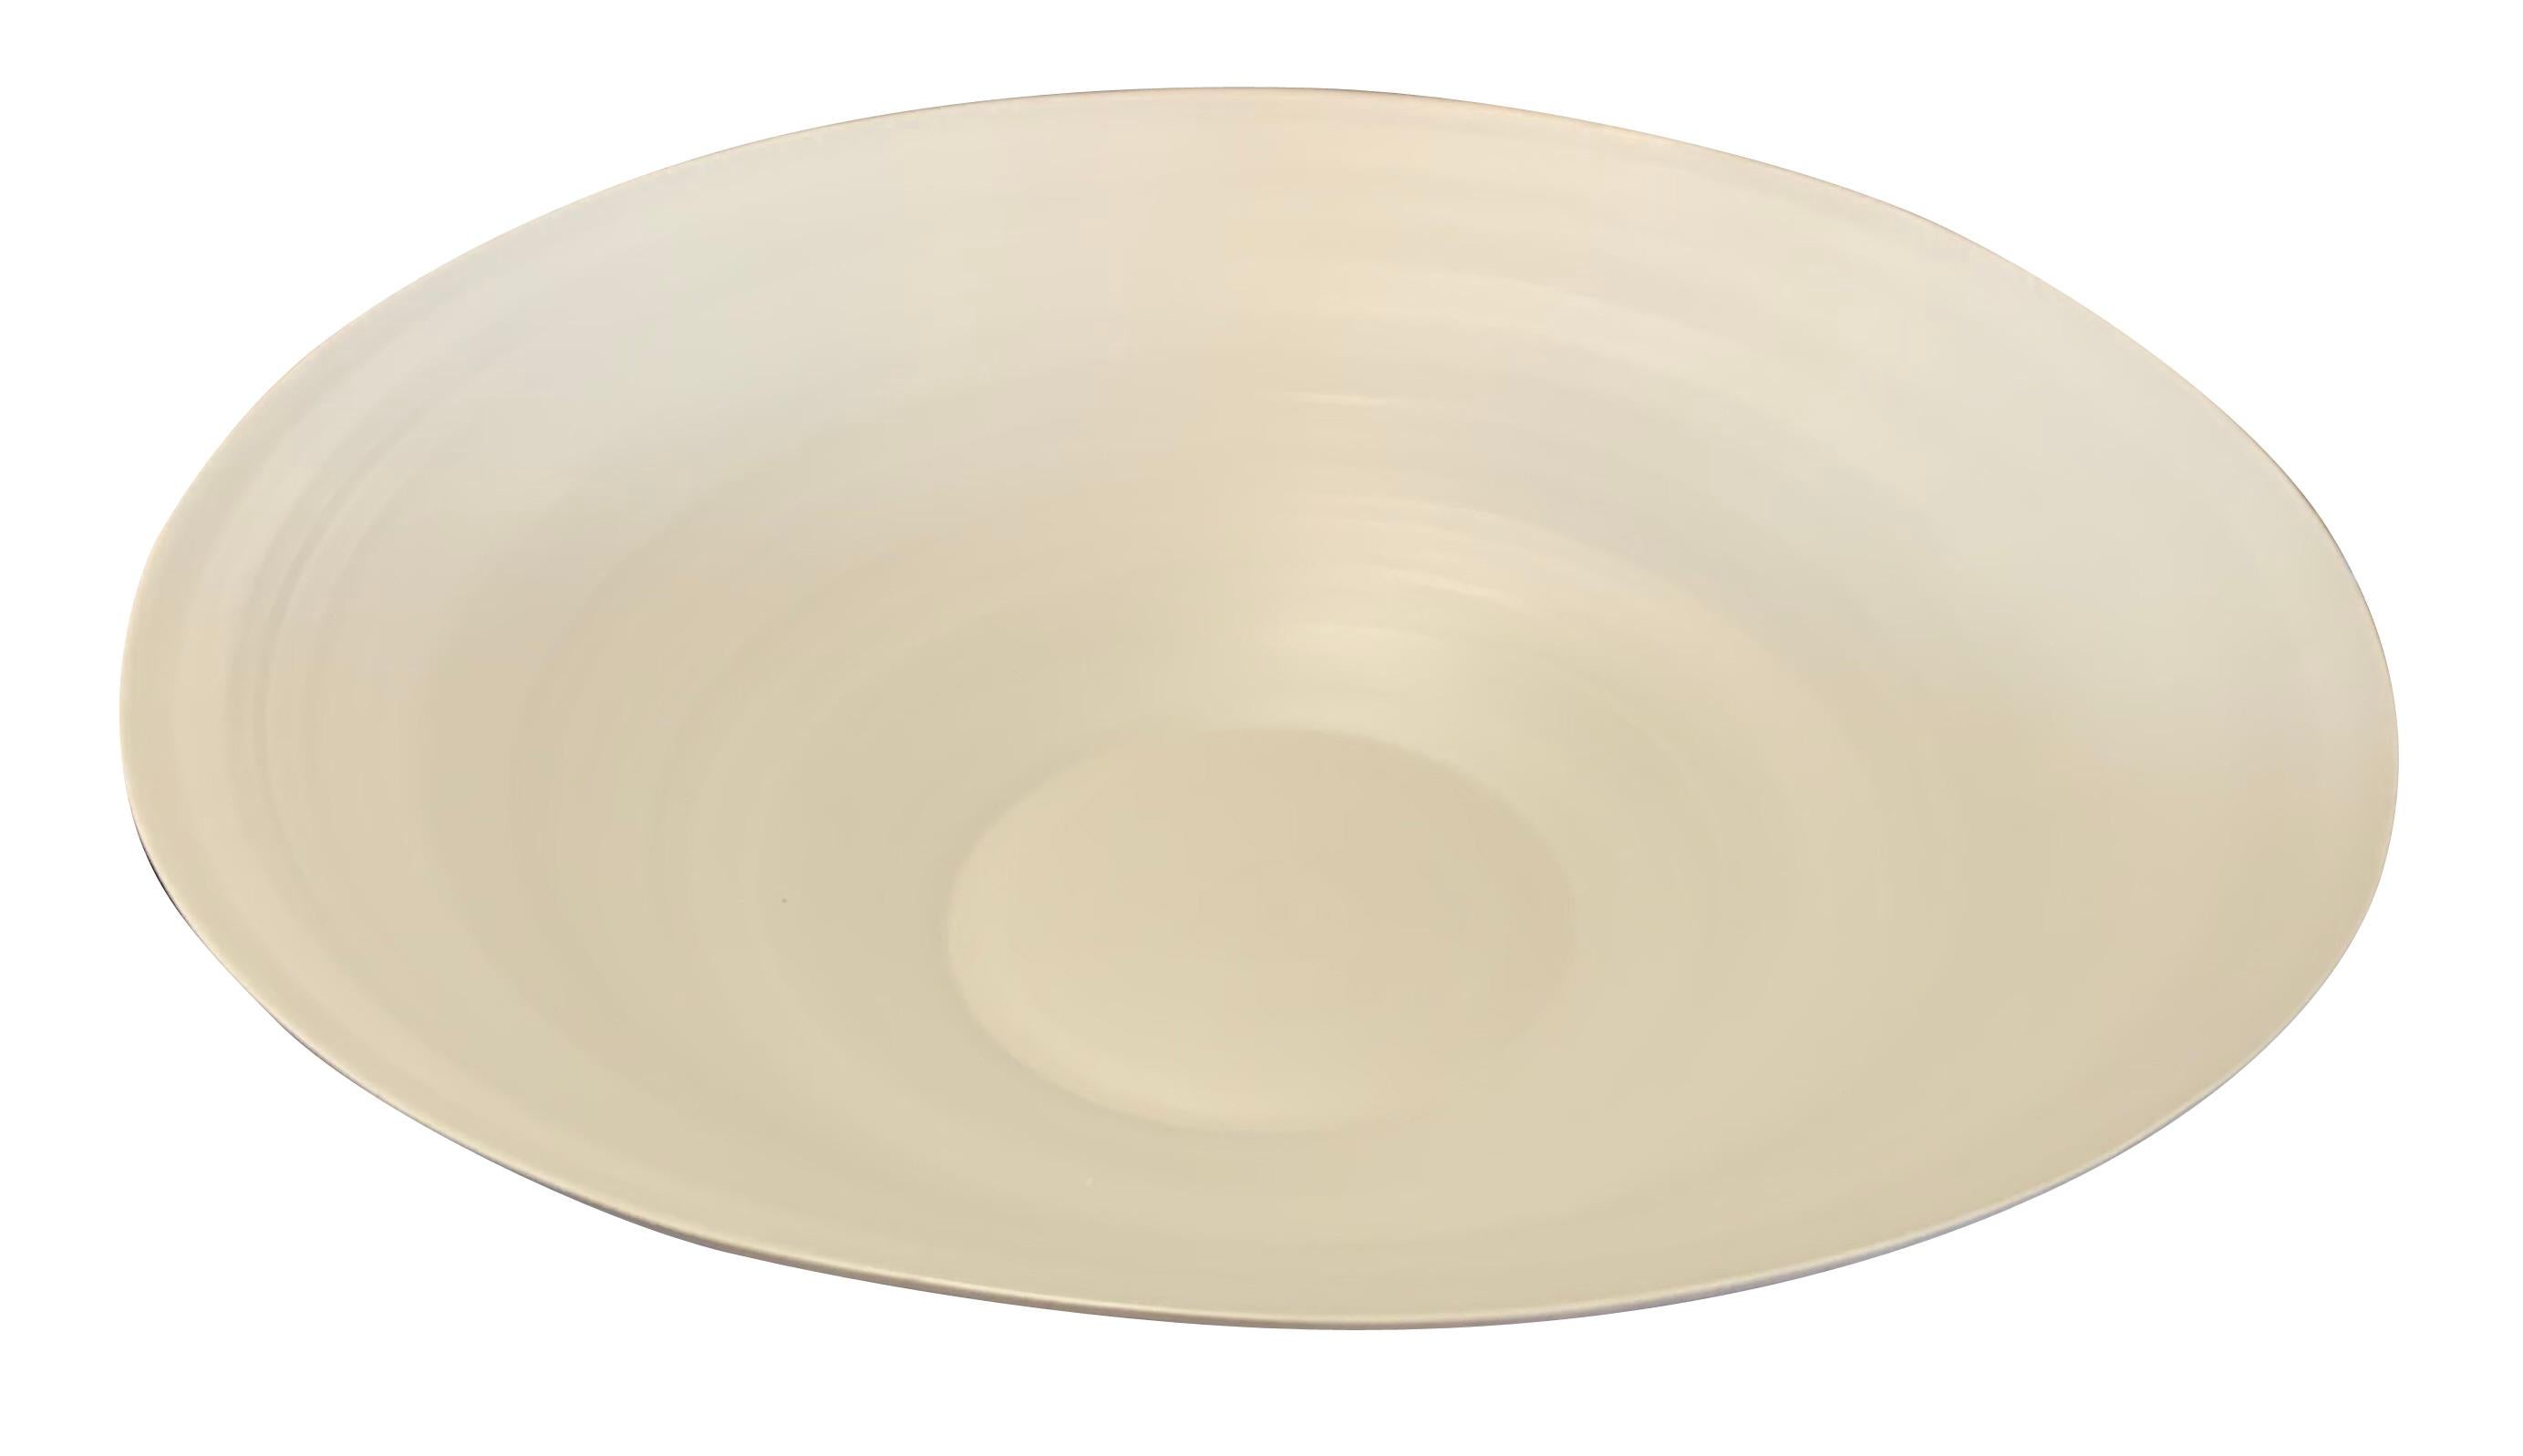 Contemporary Italian XL fine ceramic handmade bowl.
Solid linen color on the interior.
Crackle linen / black 